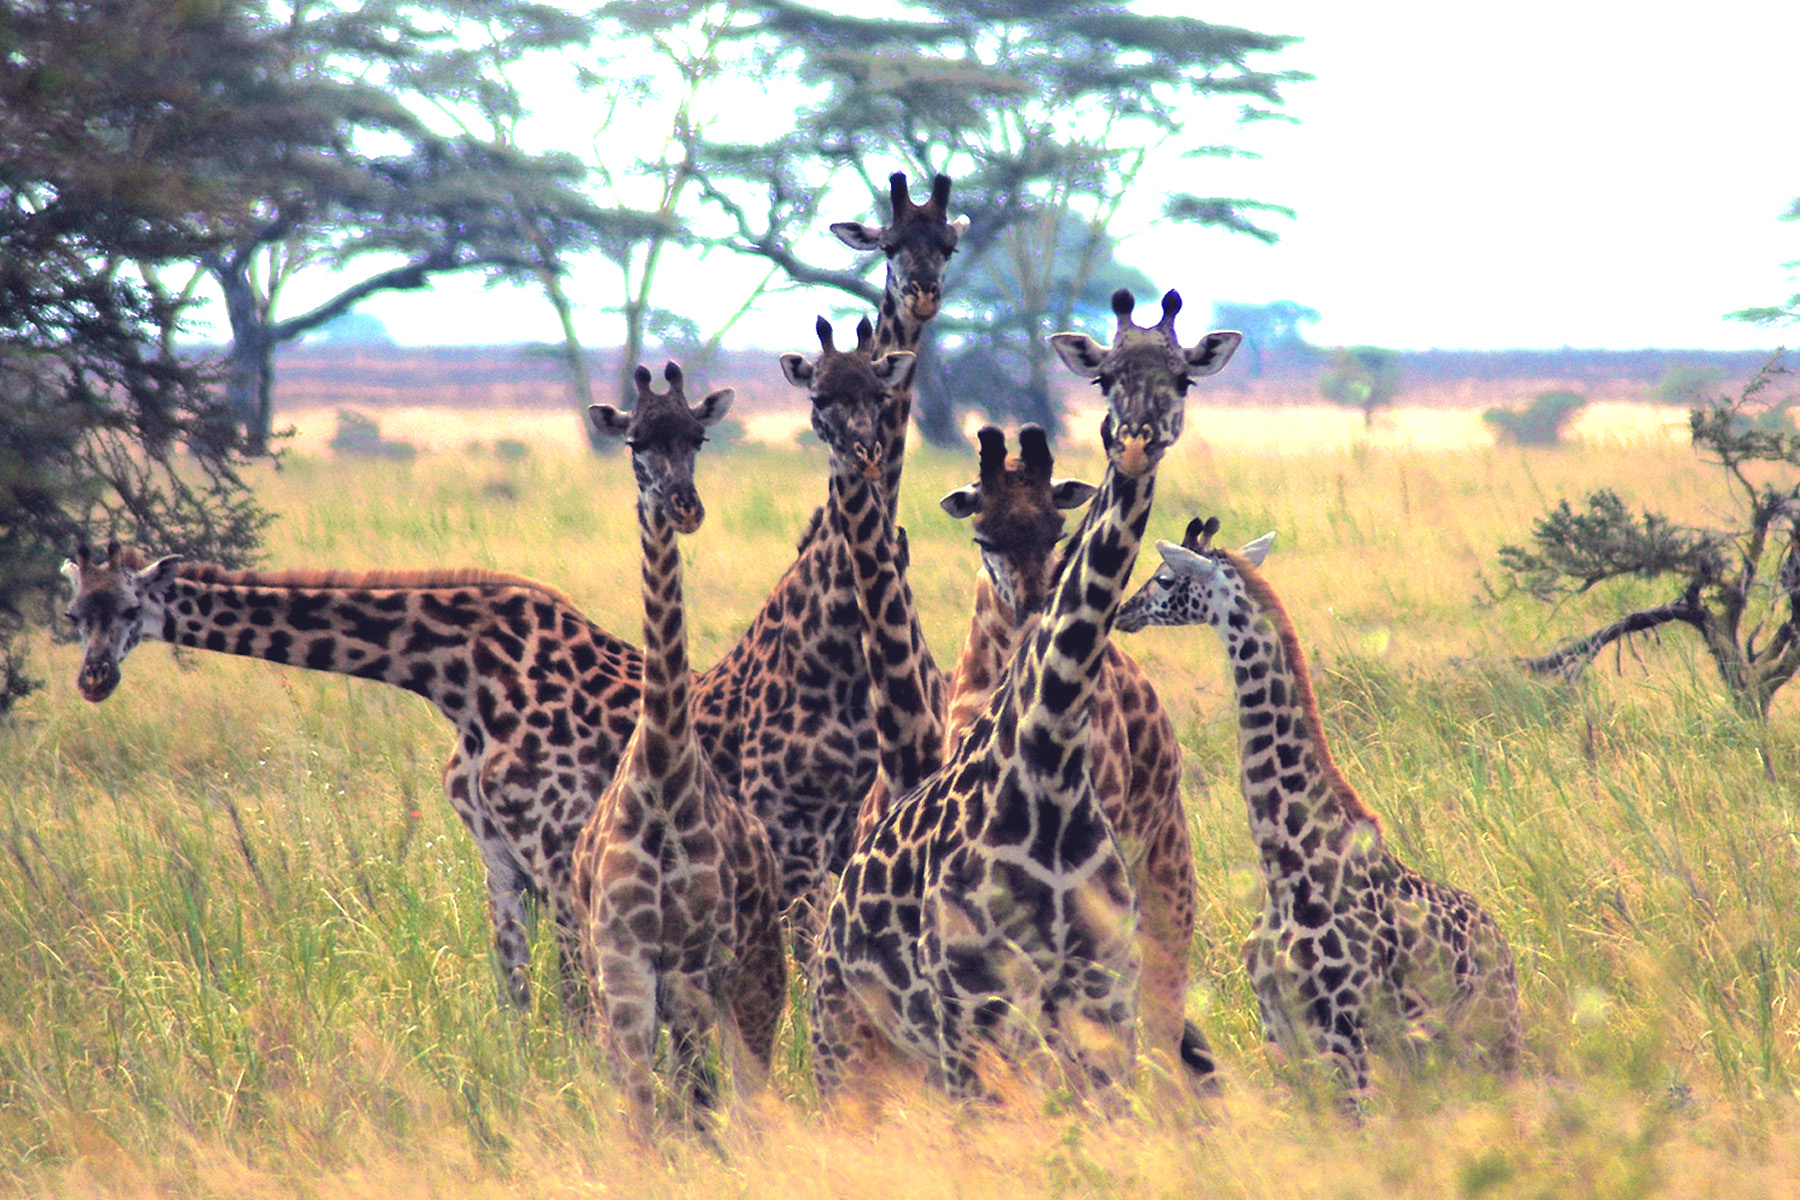 Serengeti - Seven Giraffes in a Group - 0571.jpg